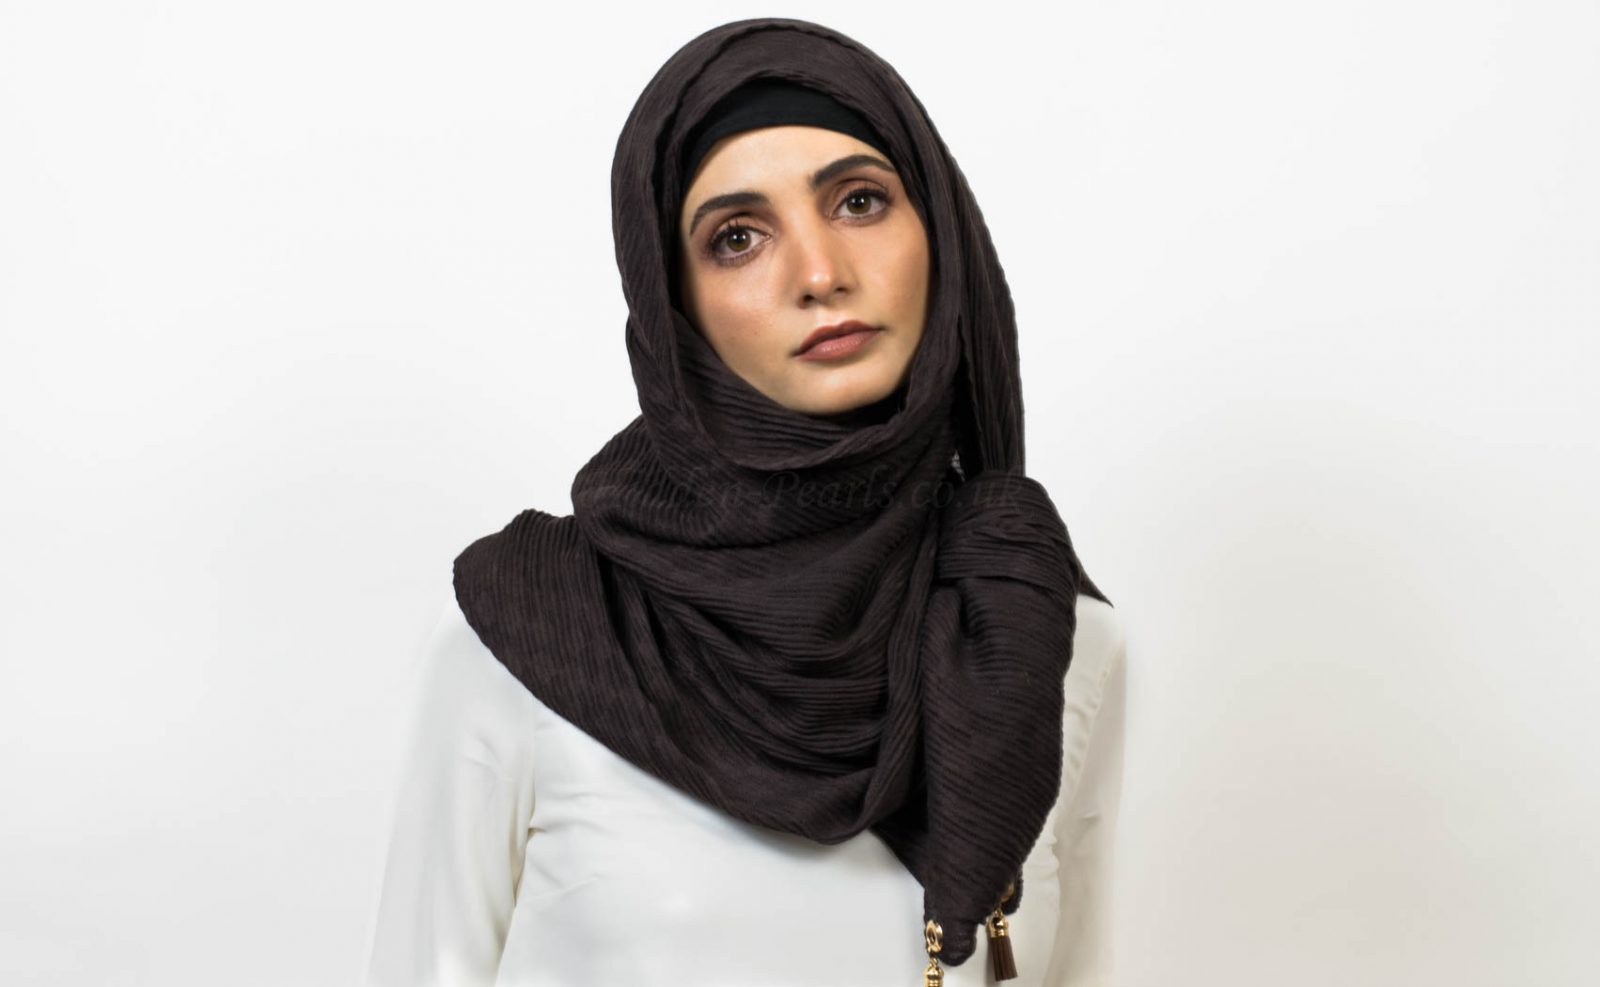 Leather Tassel Hijab - Chocolate - Hidden Pearls